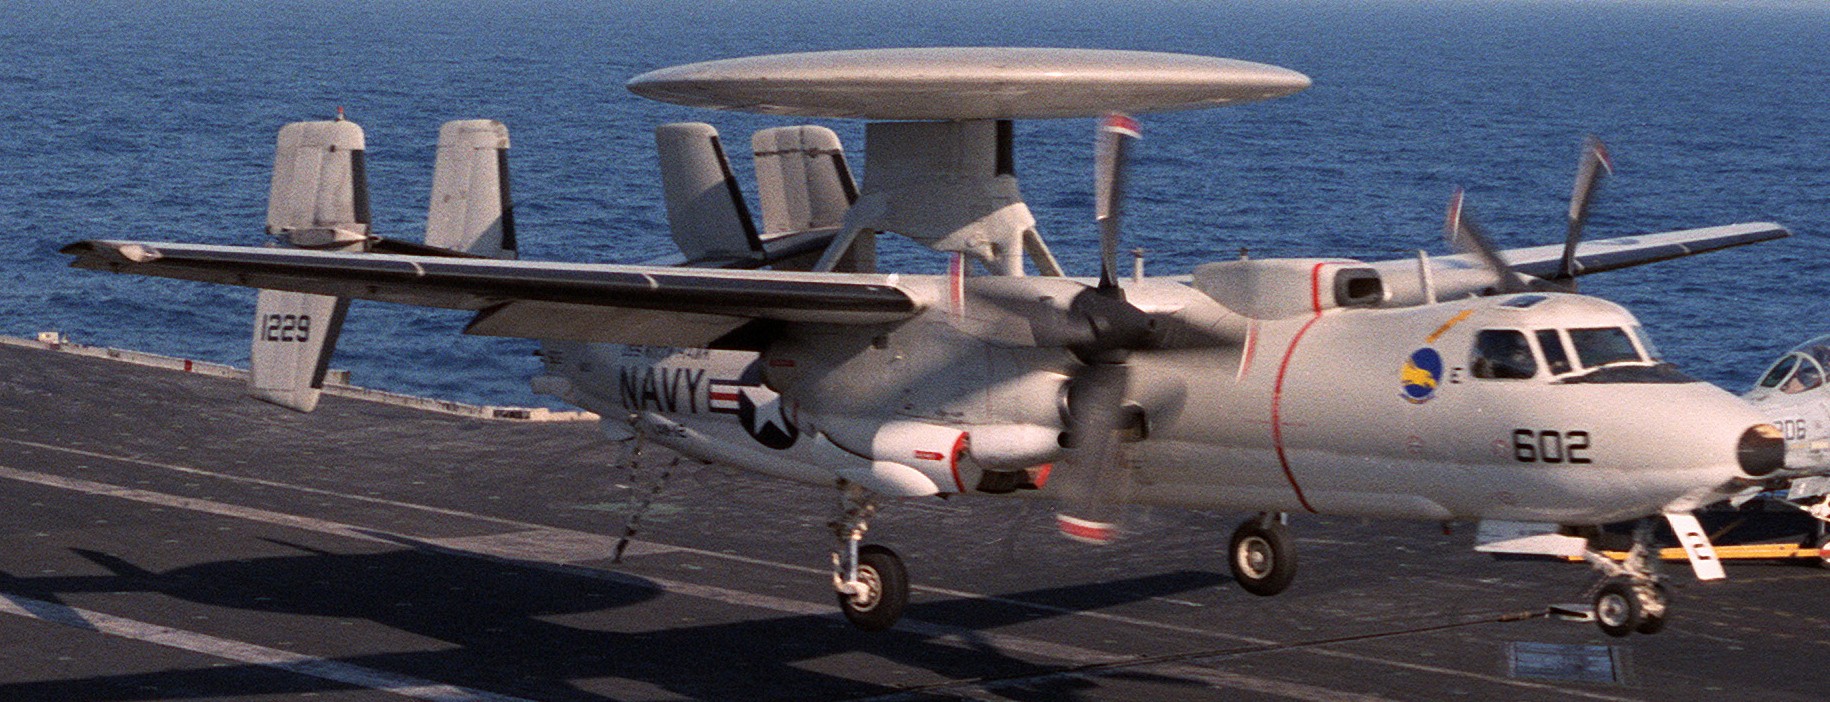 vaw-112 golden hawks carrier airborne early warning squadron us navy grumman e-2c hawkeye cvw-9 uss kitty hawk cv-63 43